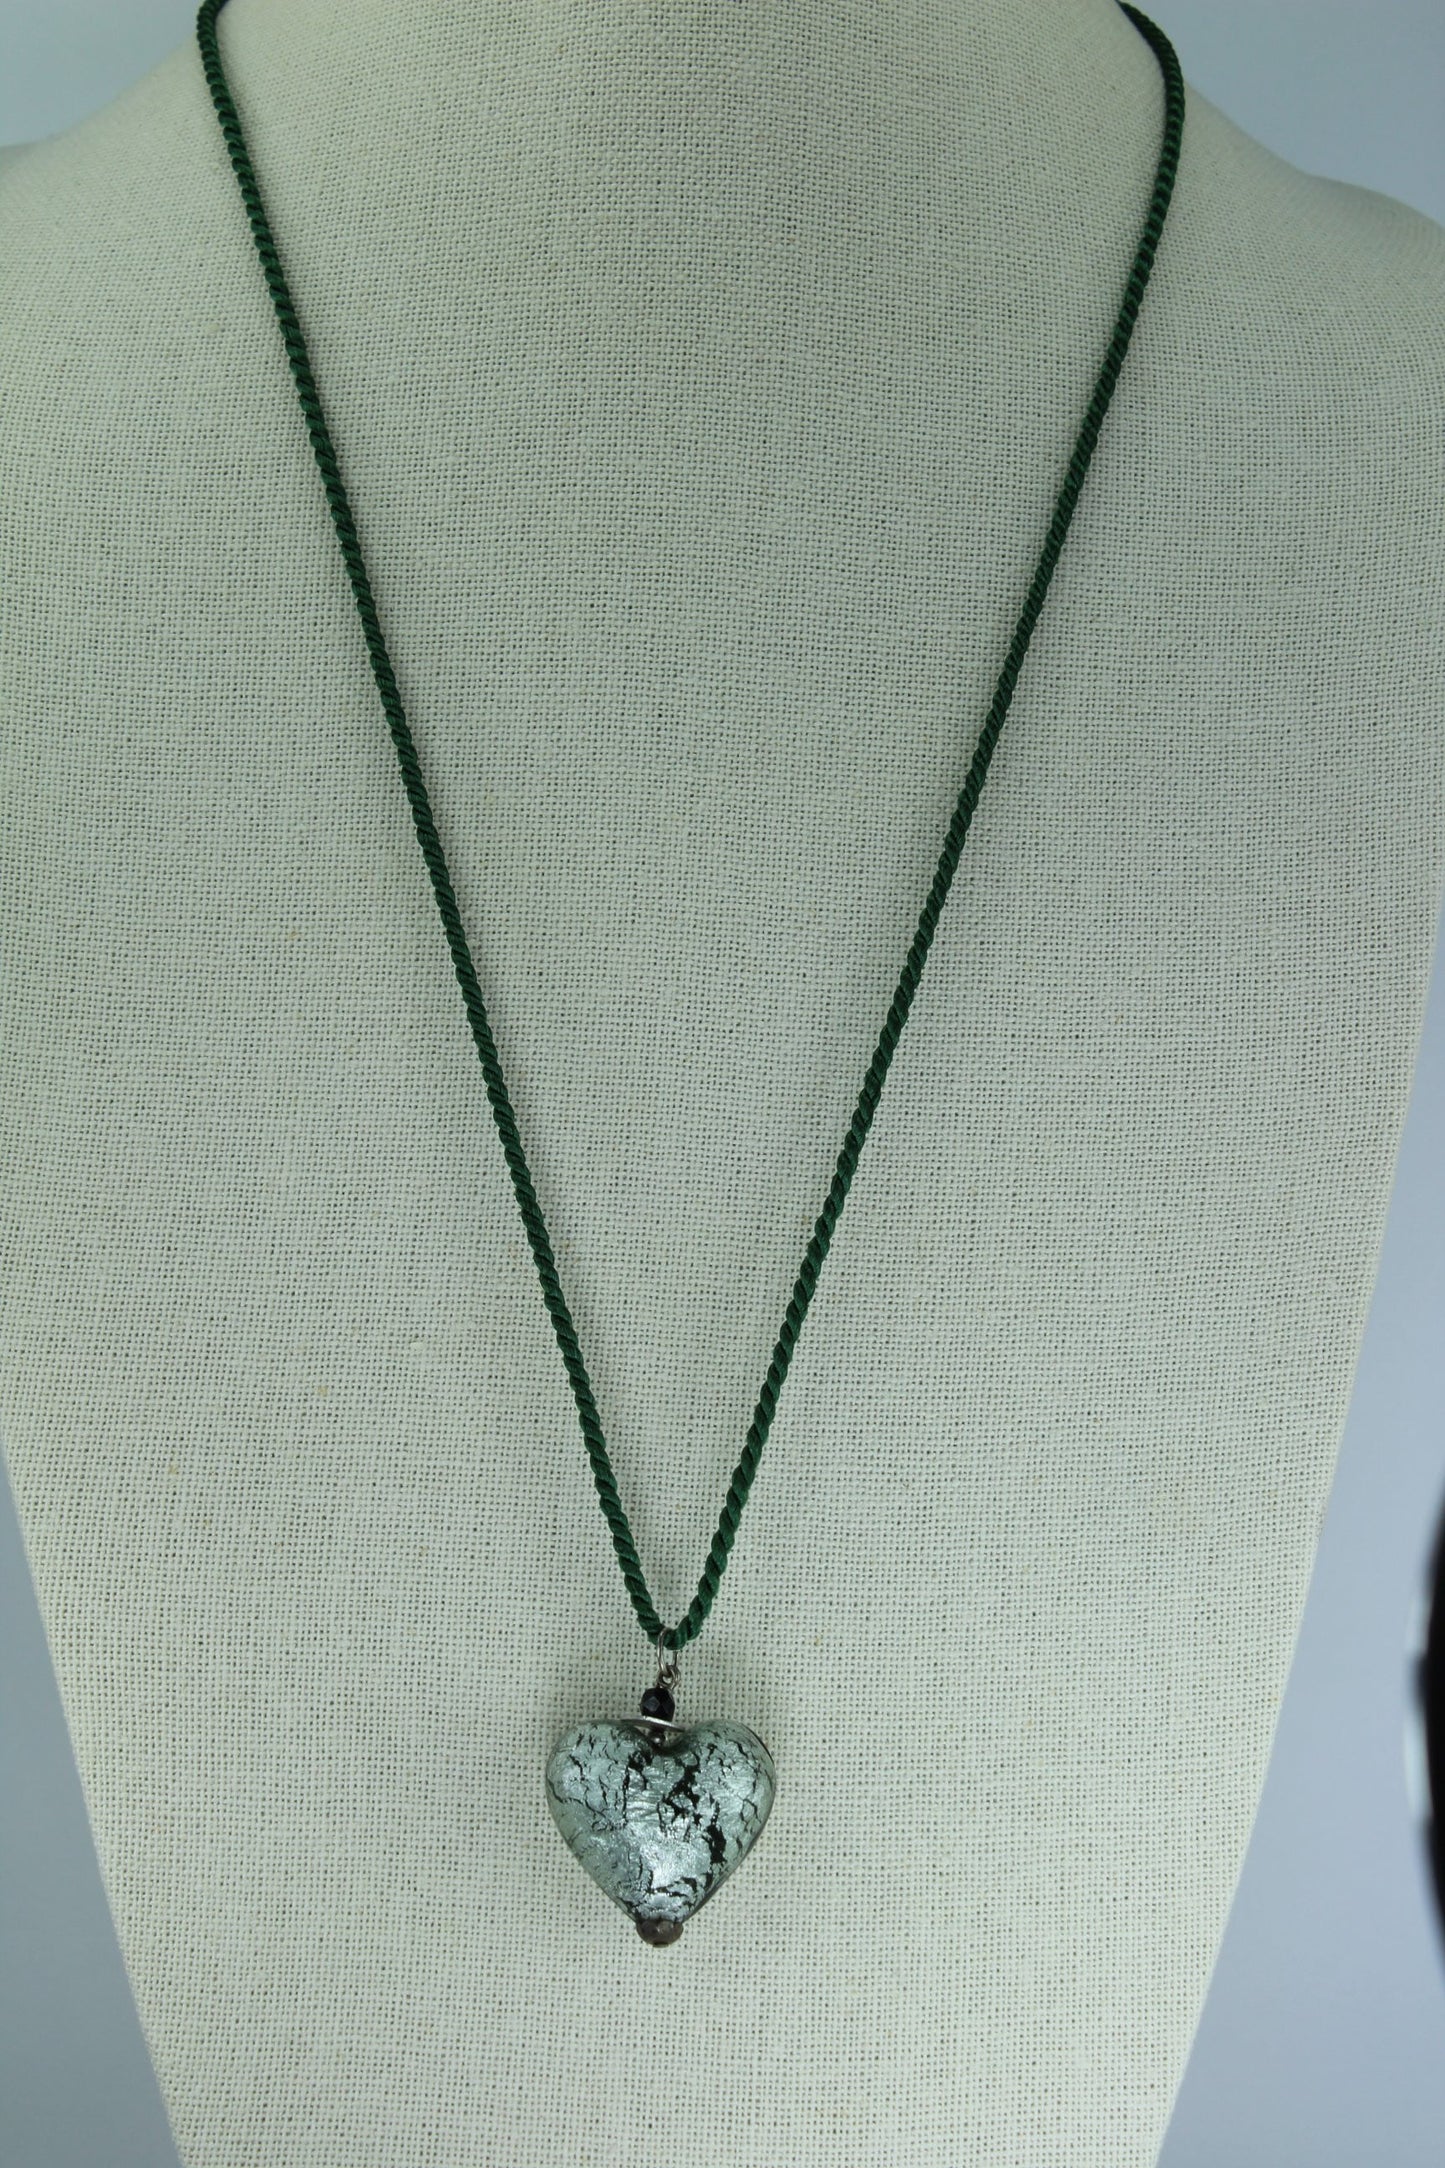 Artisan Necklace Silver Black Glass Heart Pendant Green Satin Cord stunning